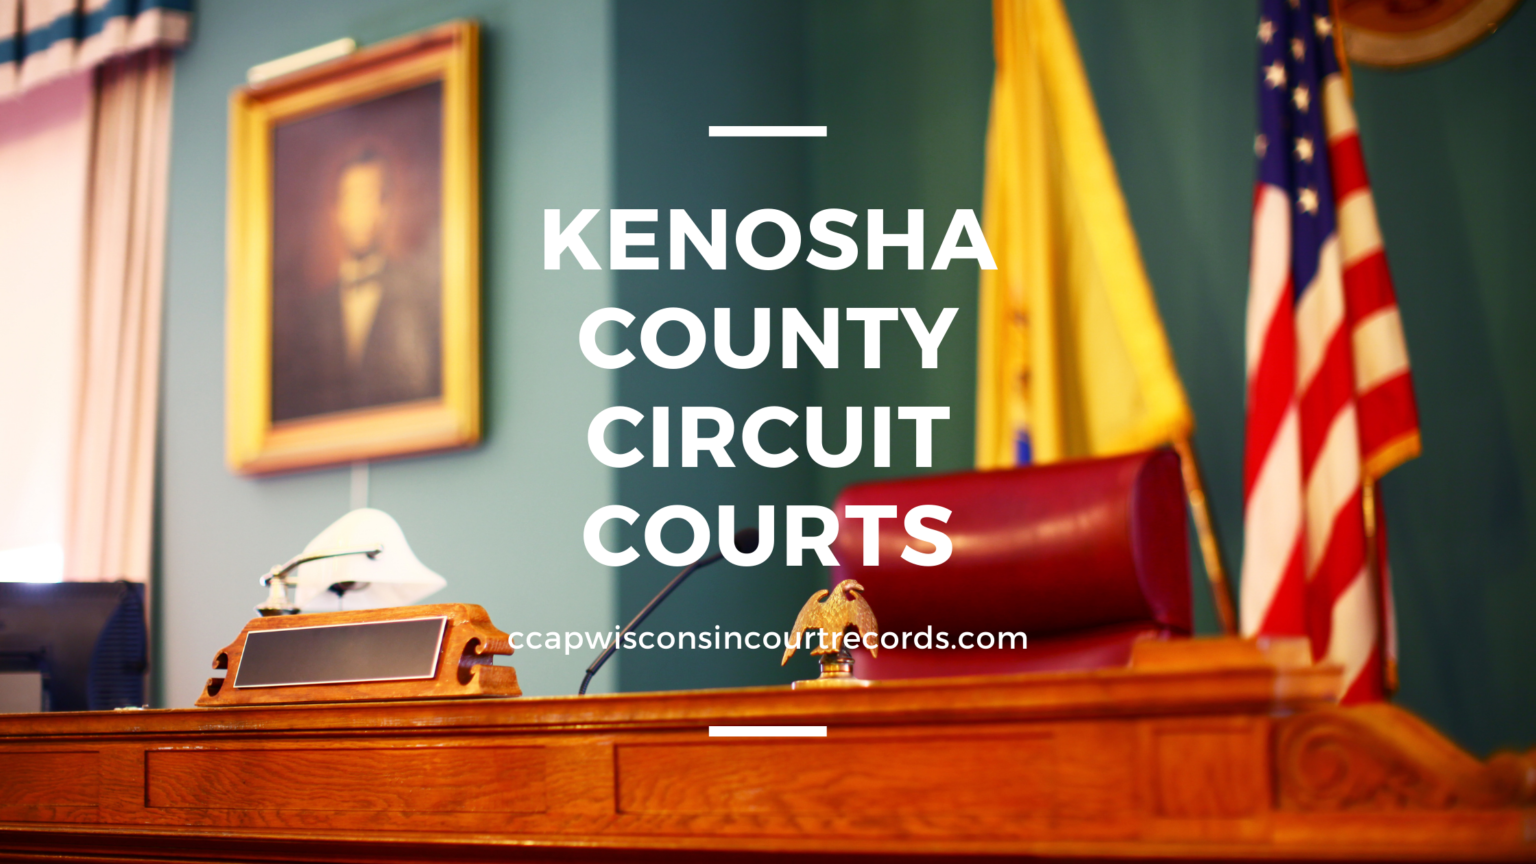 Kenosha County Circuit Courts CCAP Wisconsin Court Records